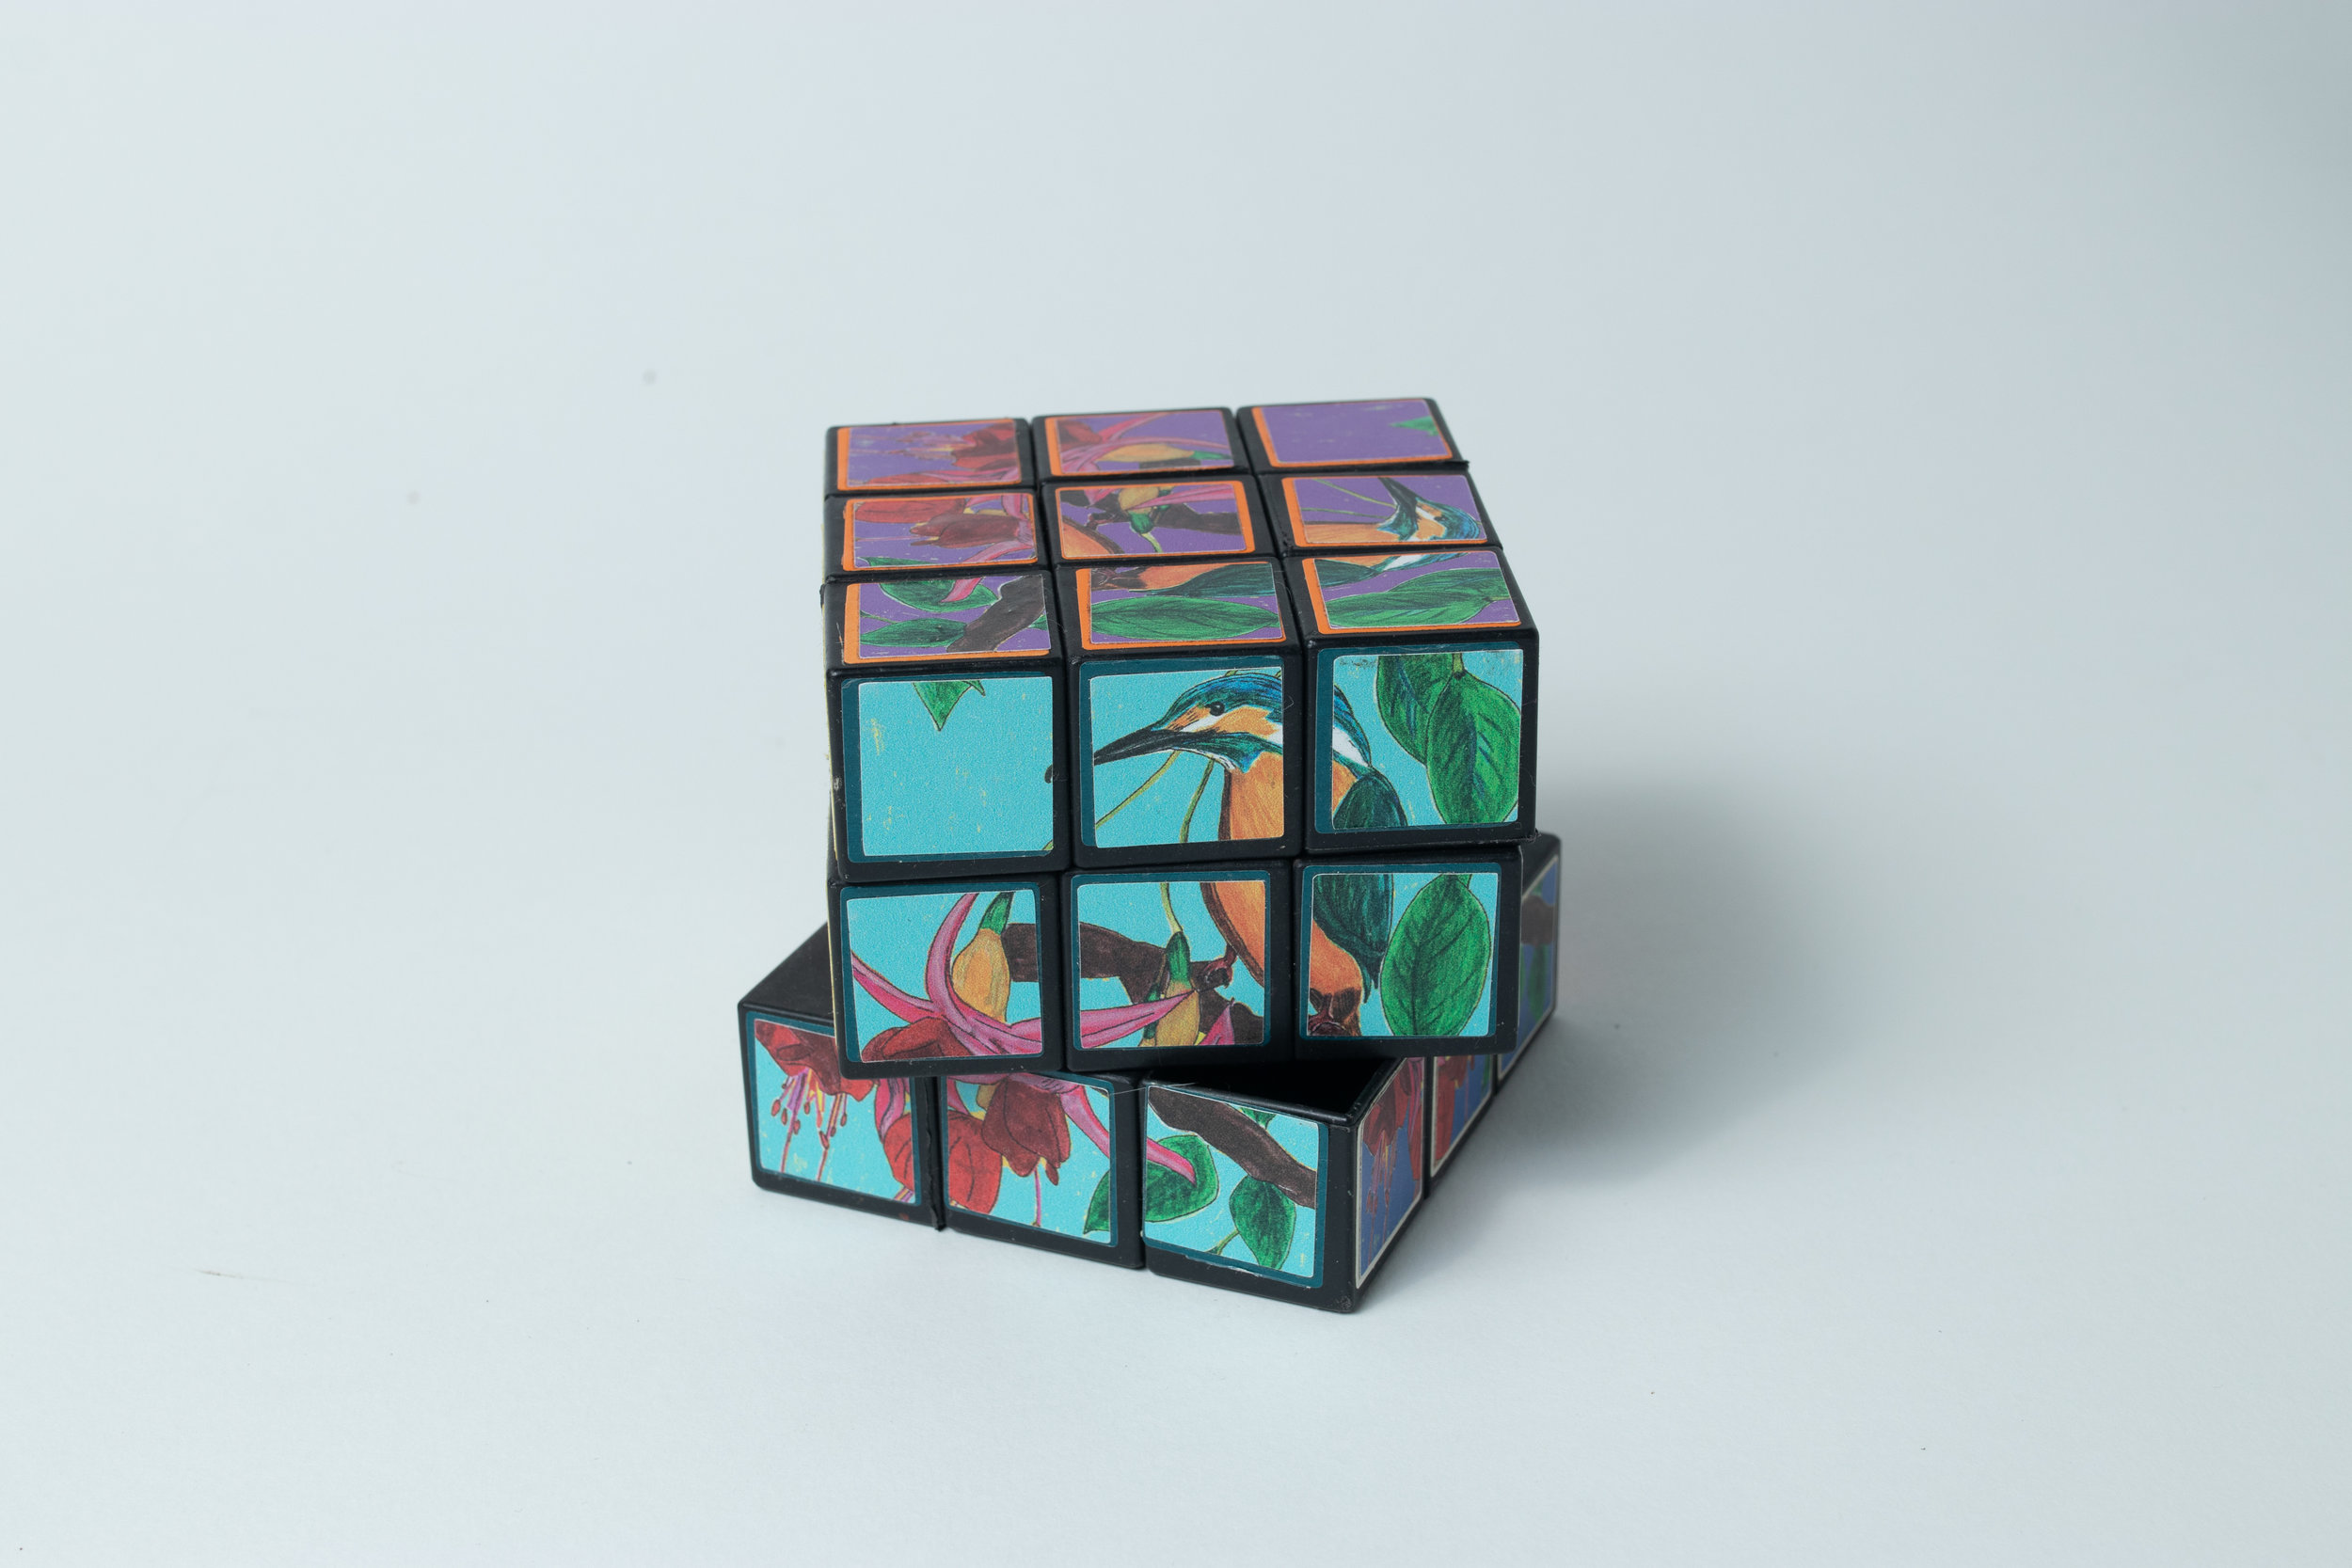   “Briths Birds Series”    5.7 cm    Vinyl Prints On Rubix Cube  